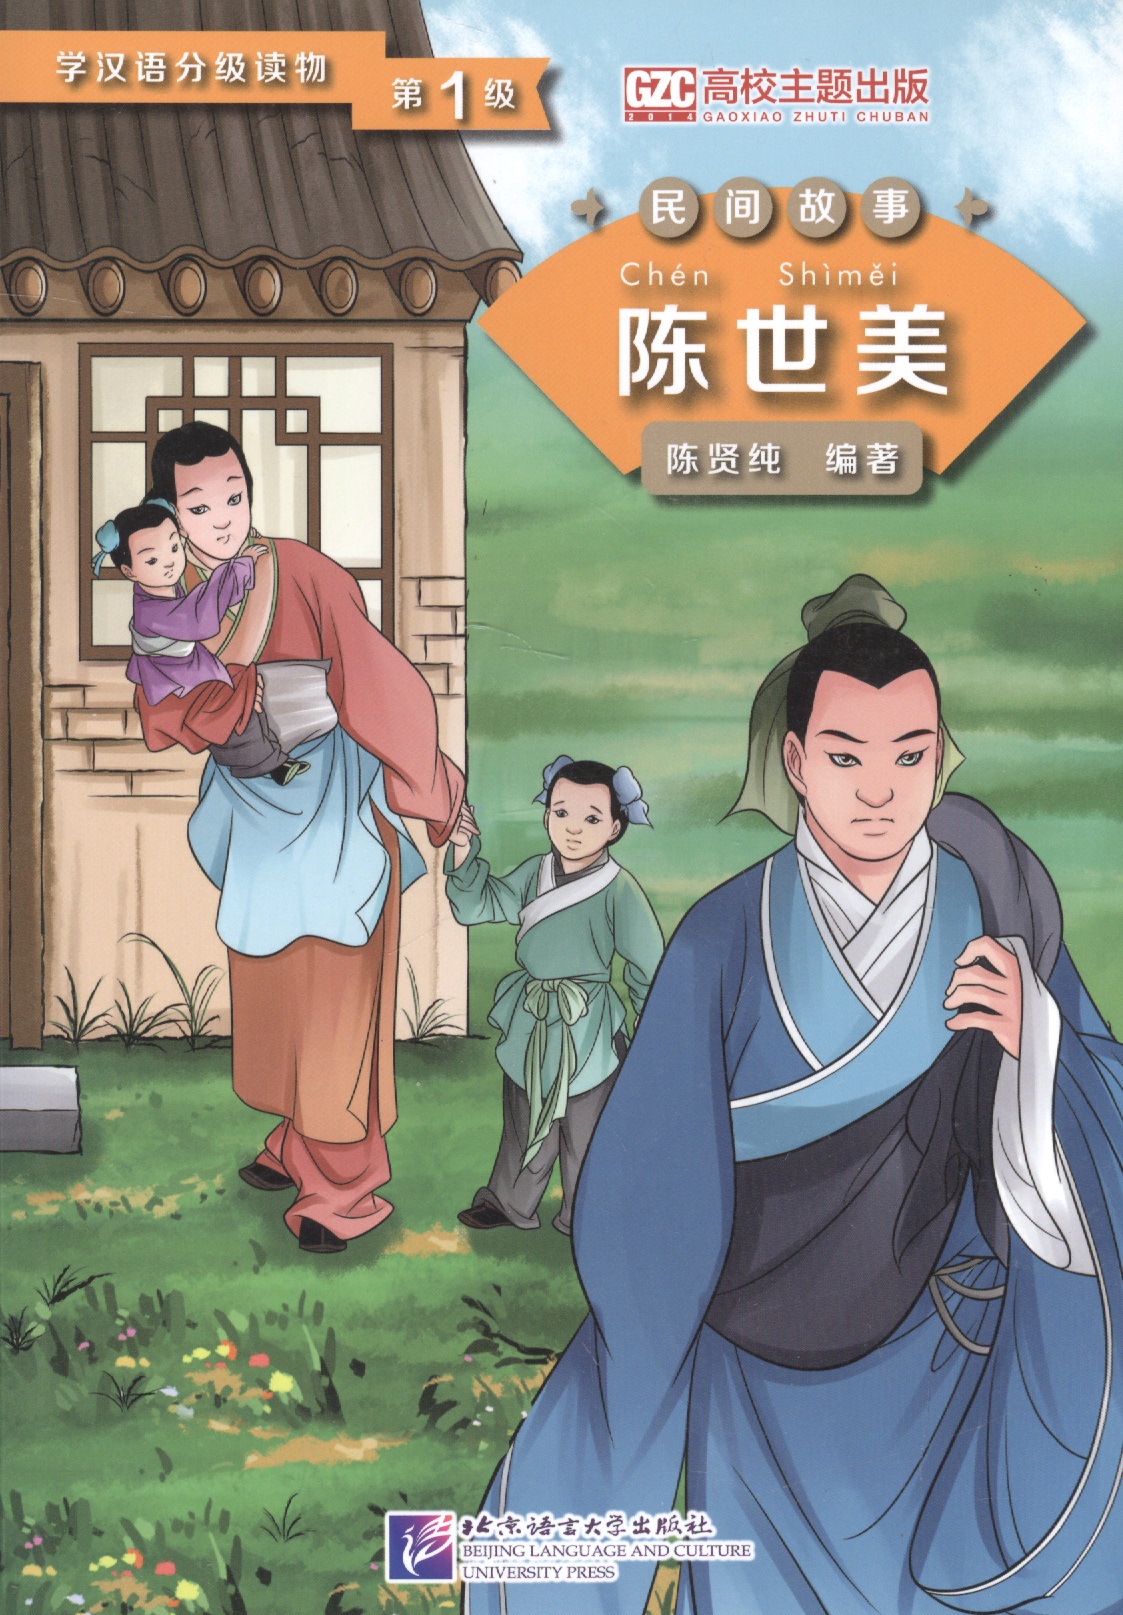 цена Graded Readers for Chinese Language Learners (Folktales): Chen Shimei. Адаптированная книга для чтения